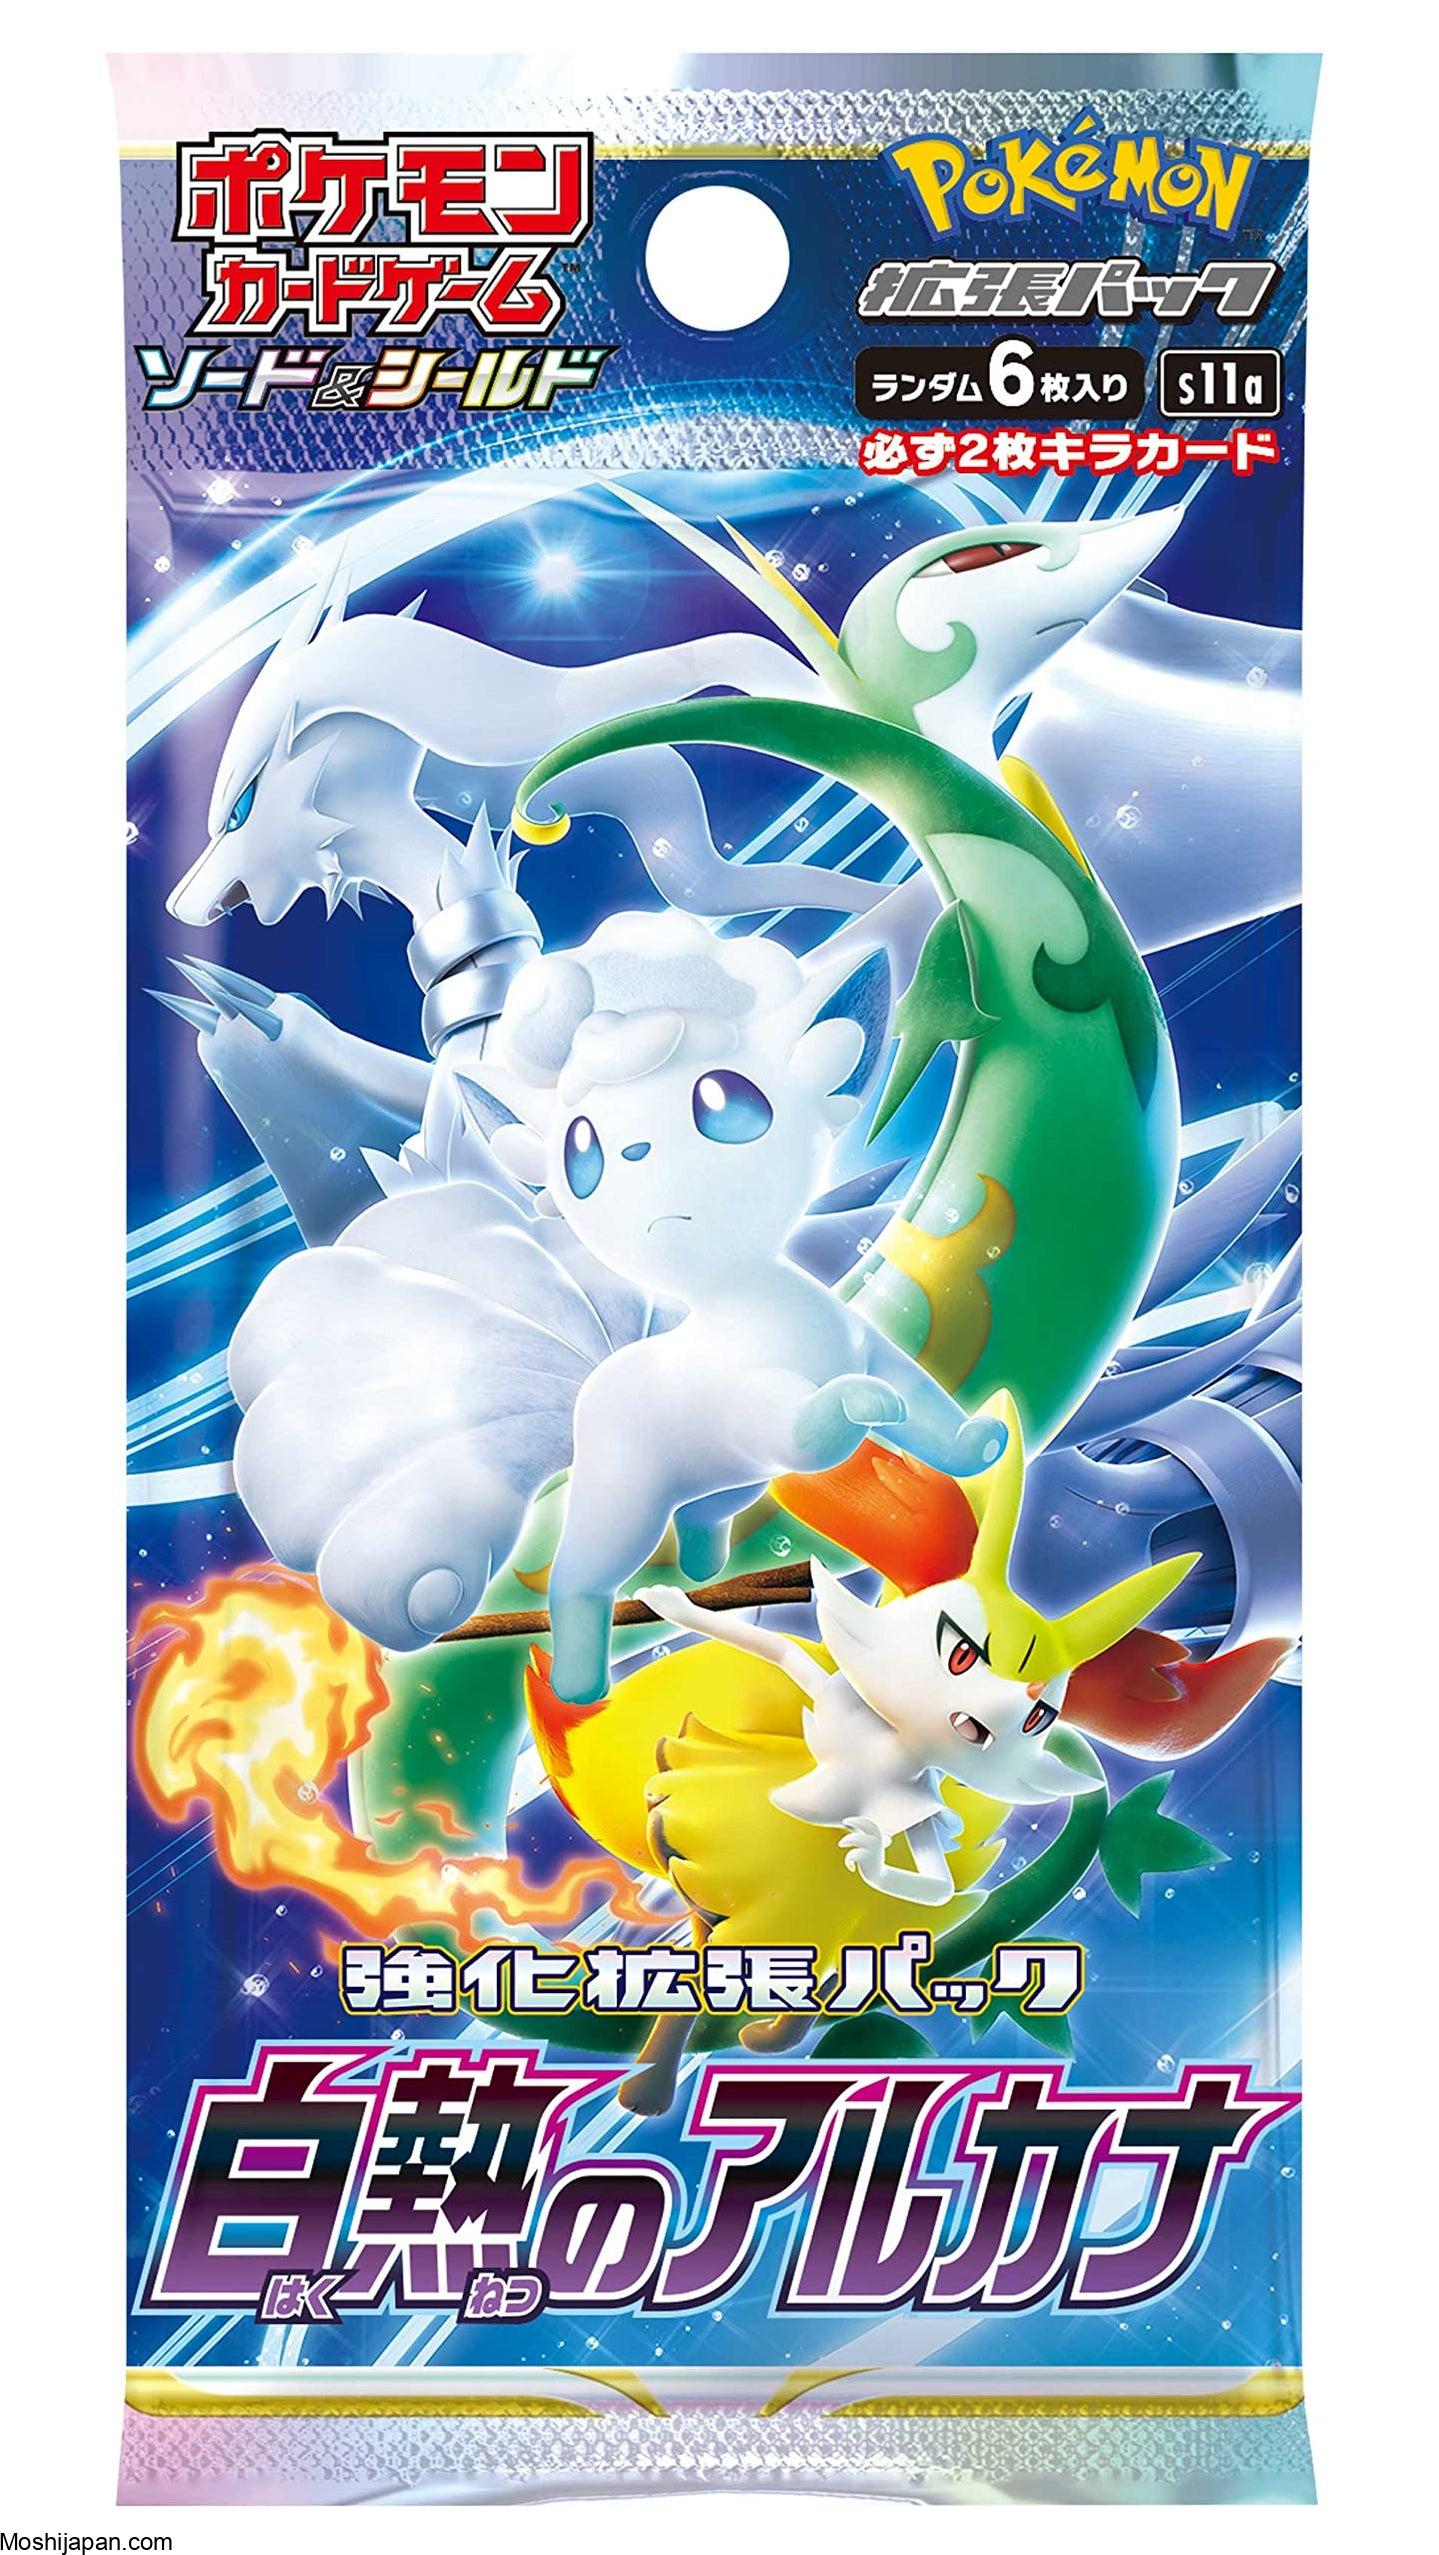 Pokémon Trading Card Game Incandescent Arcana s11a - Sealed 2